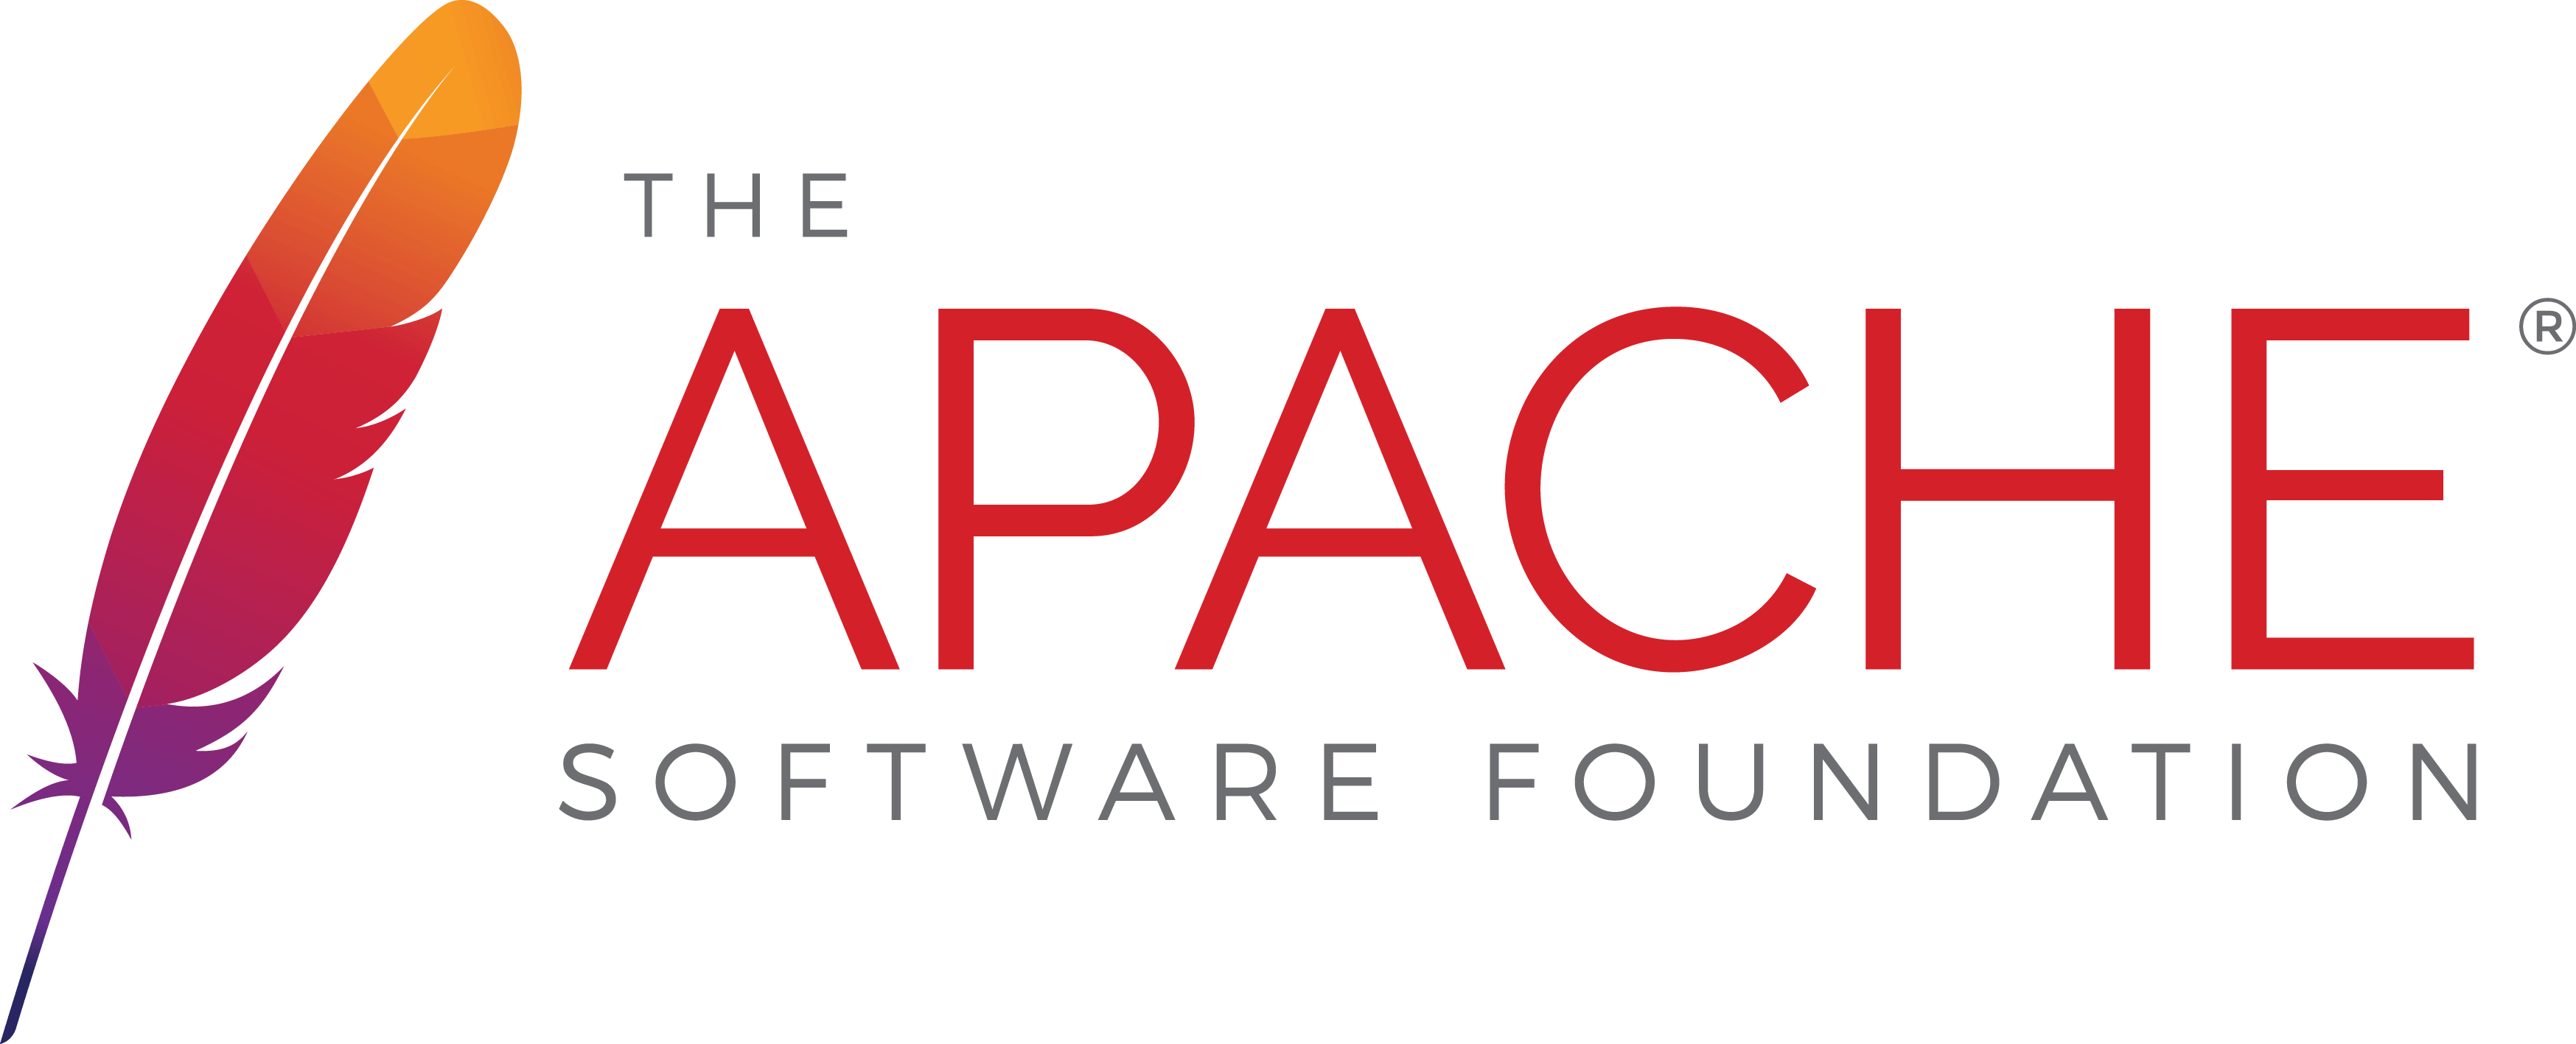 Google Software Logo - Apache Software Foundation Graphics